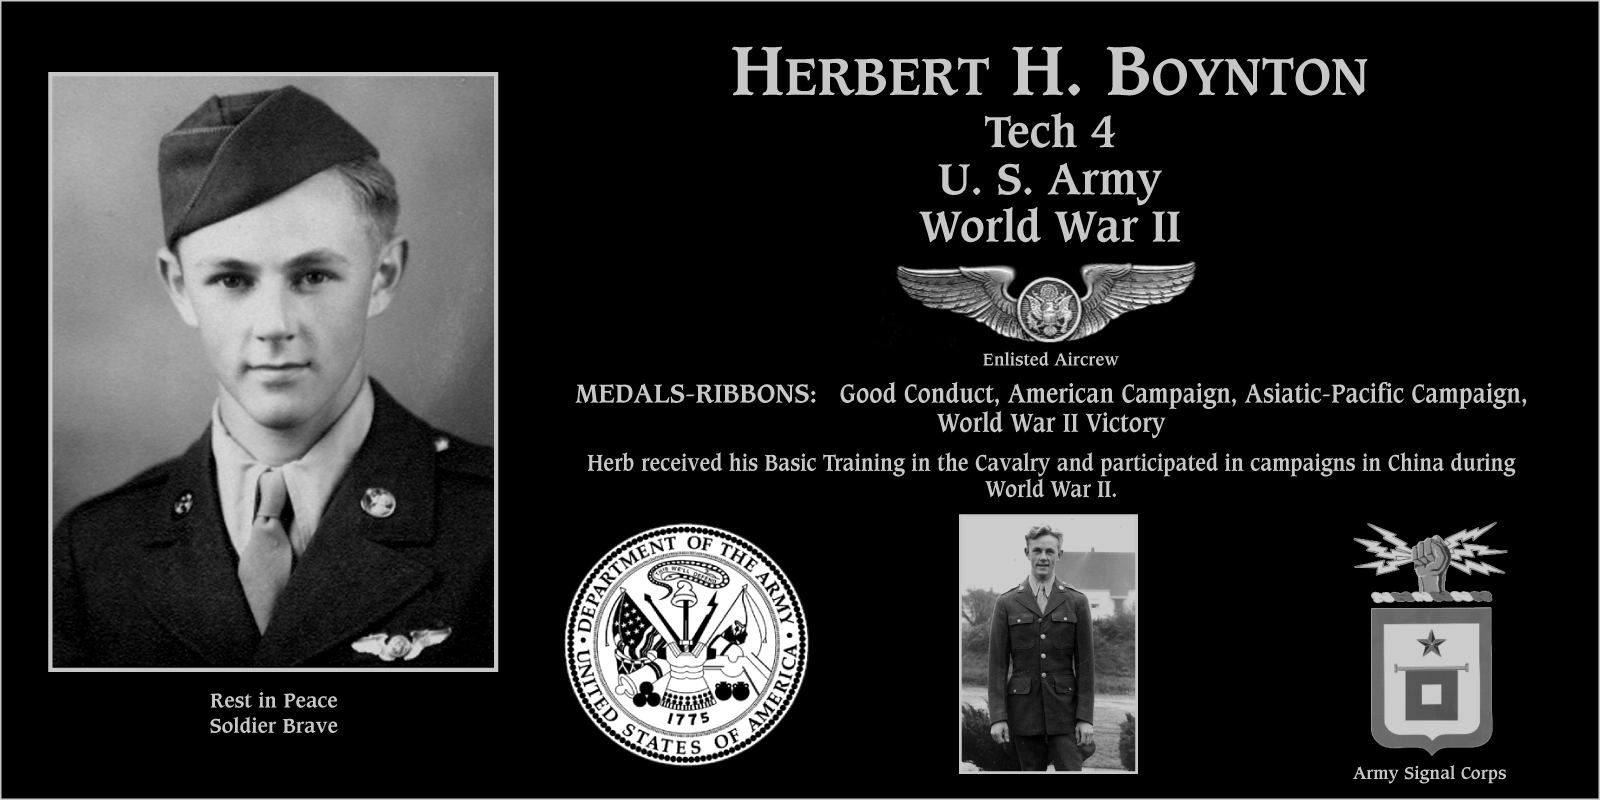 Herbert H. Boynton